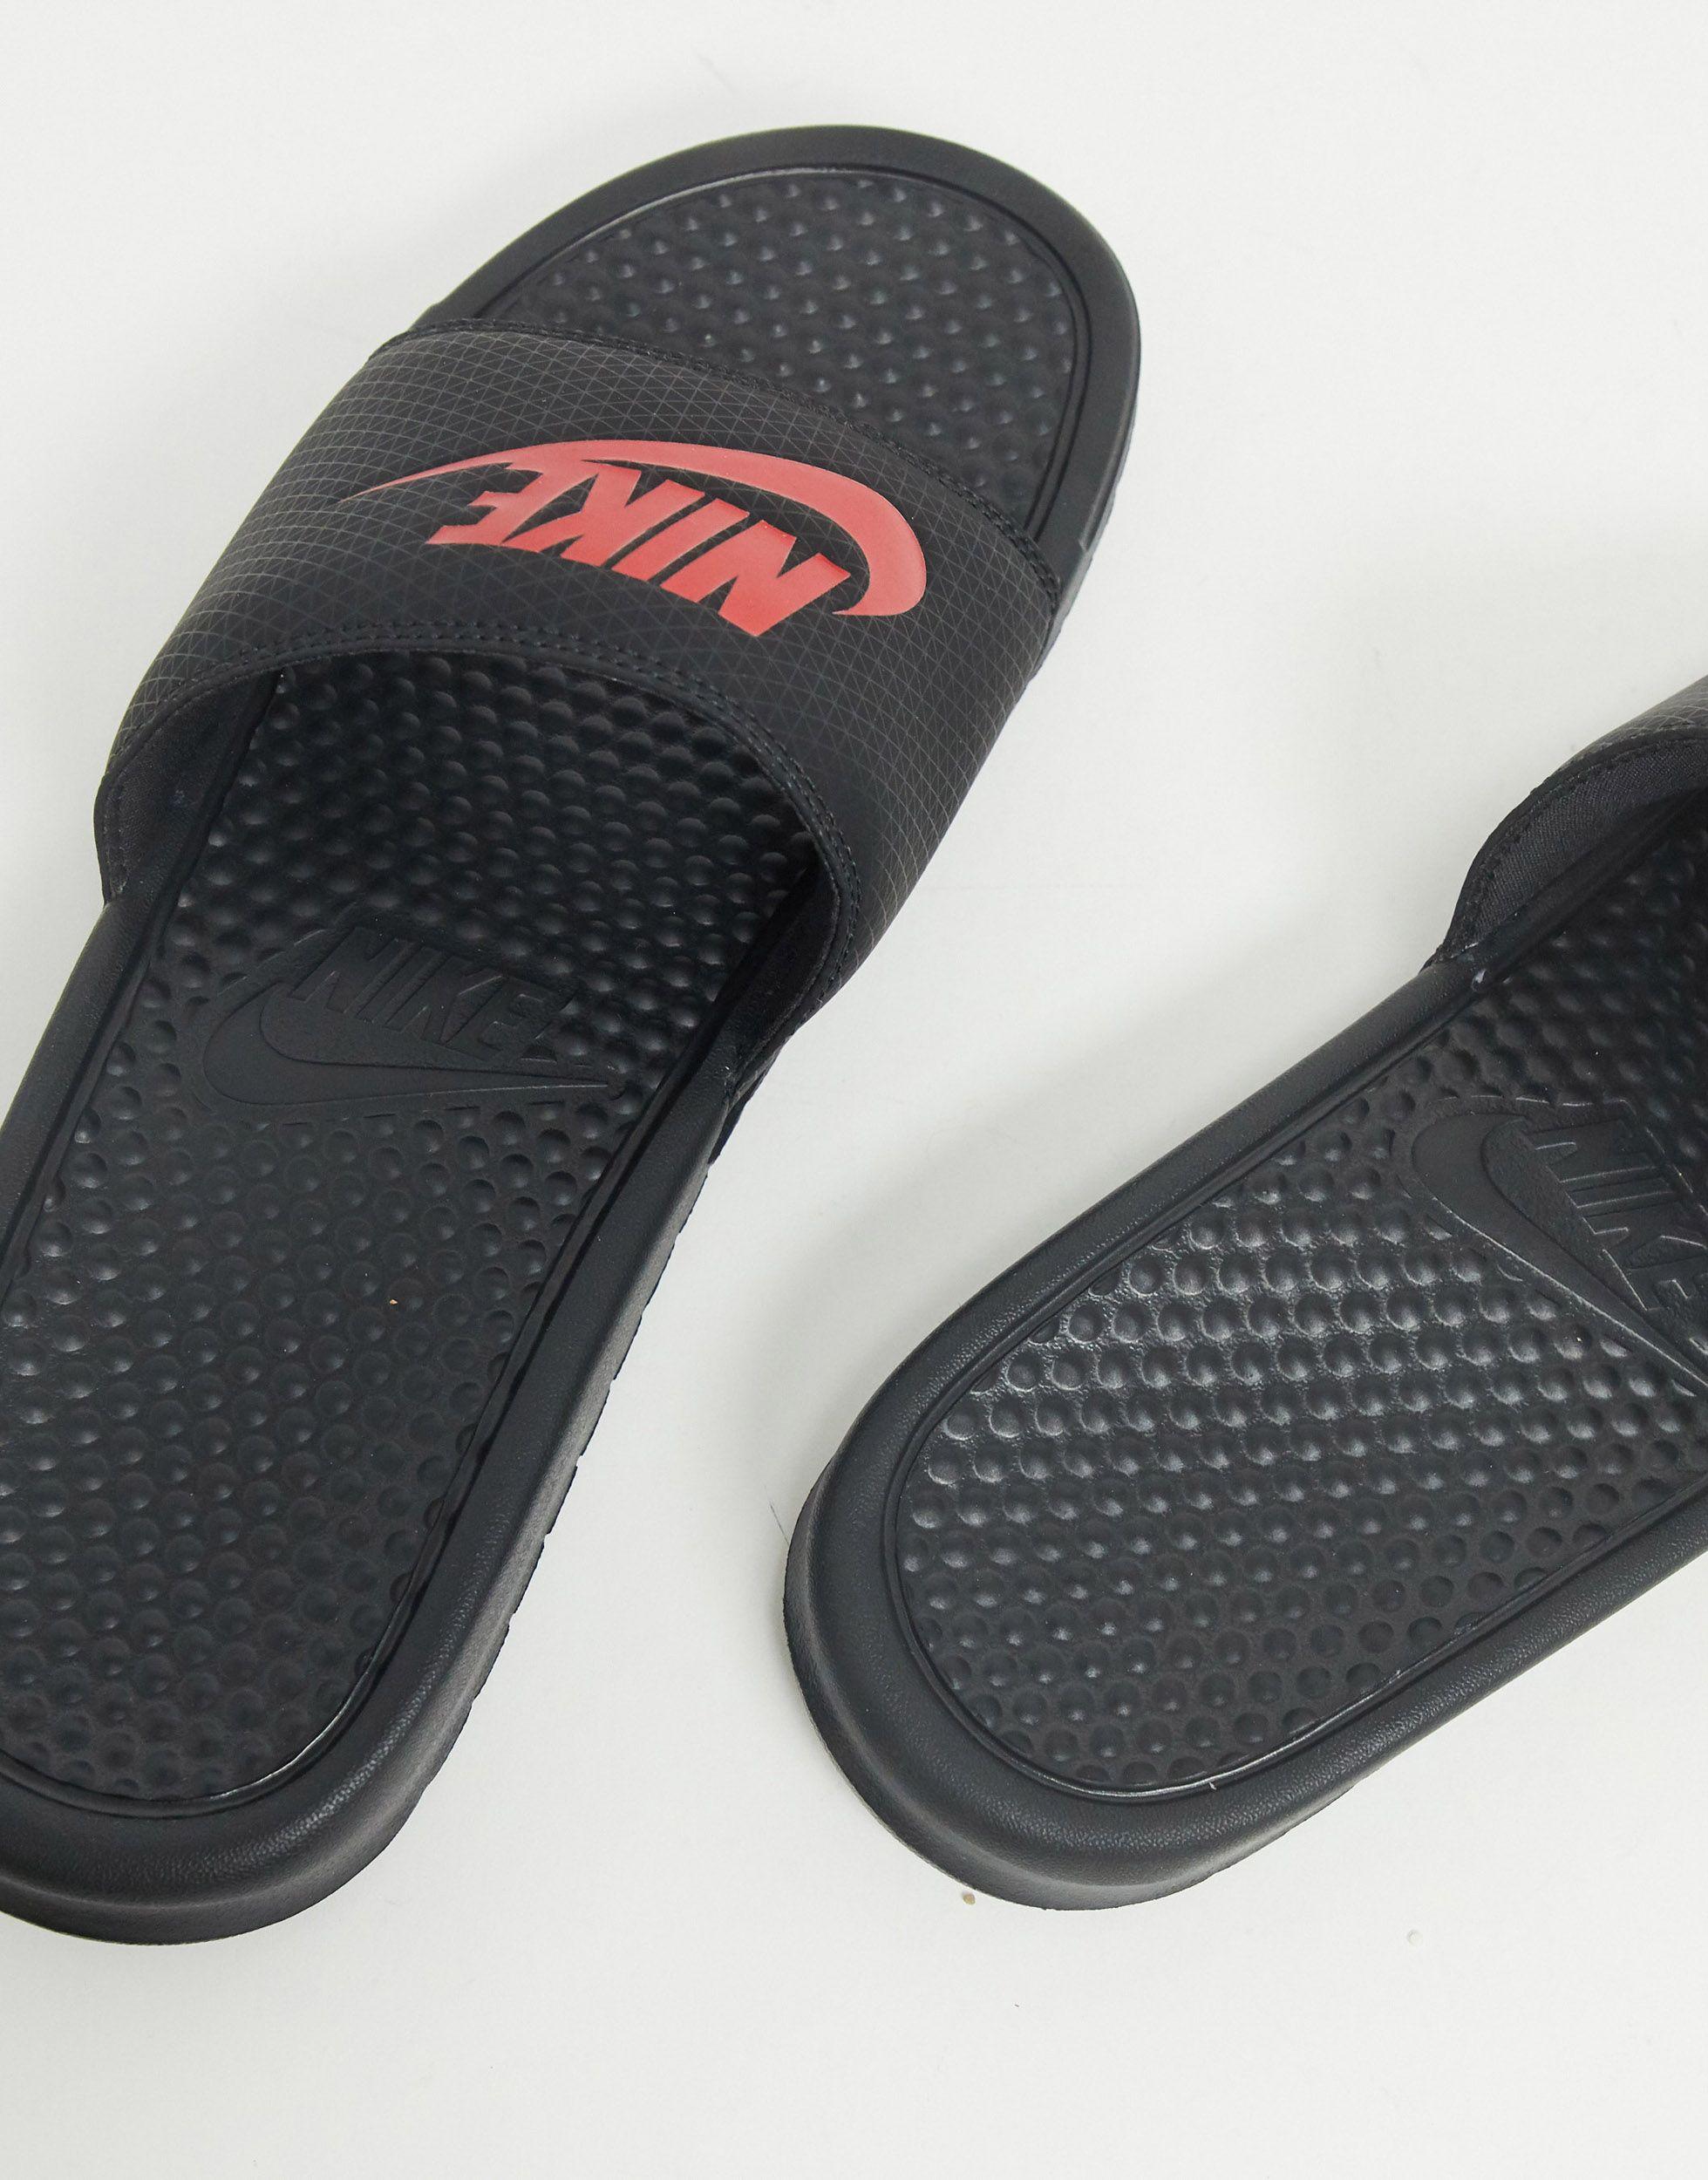 Nike Benassi Jdi Slides in Black,White (Black) for Men - Save 43% | Lyst